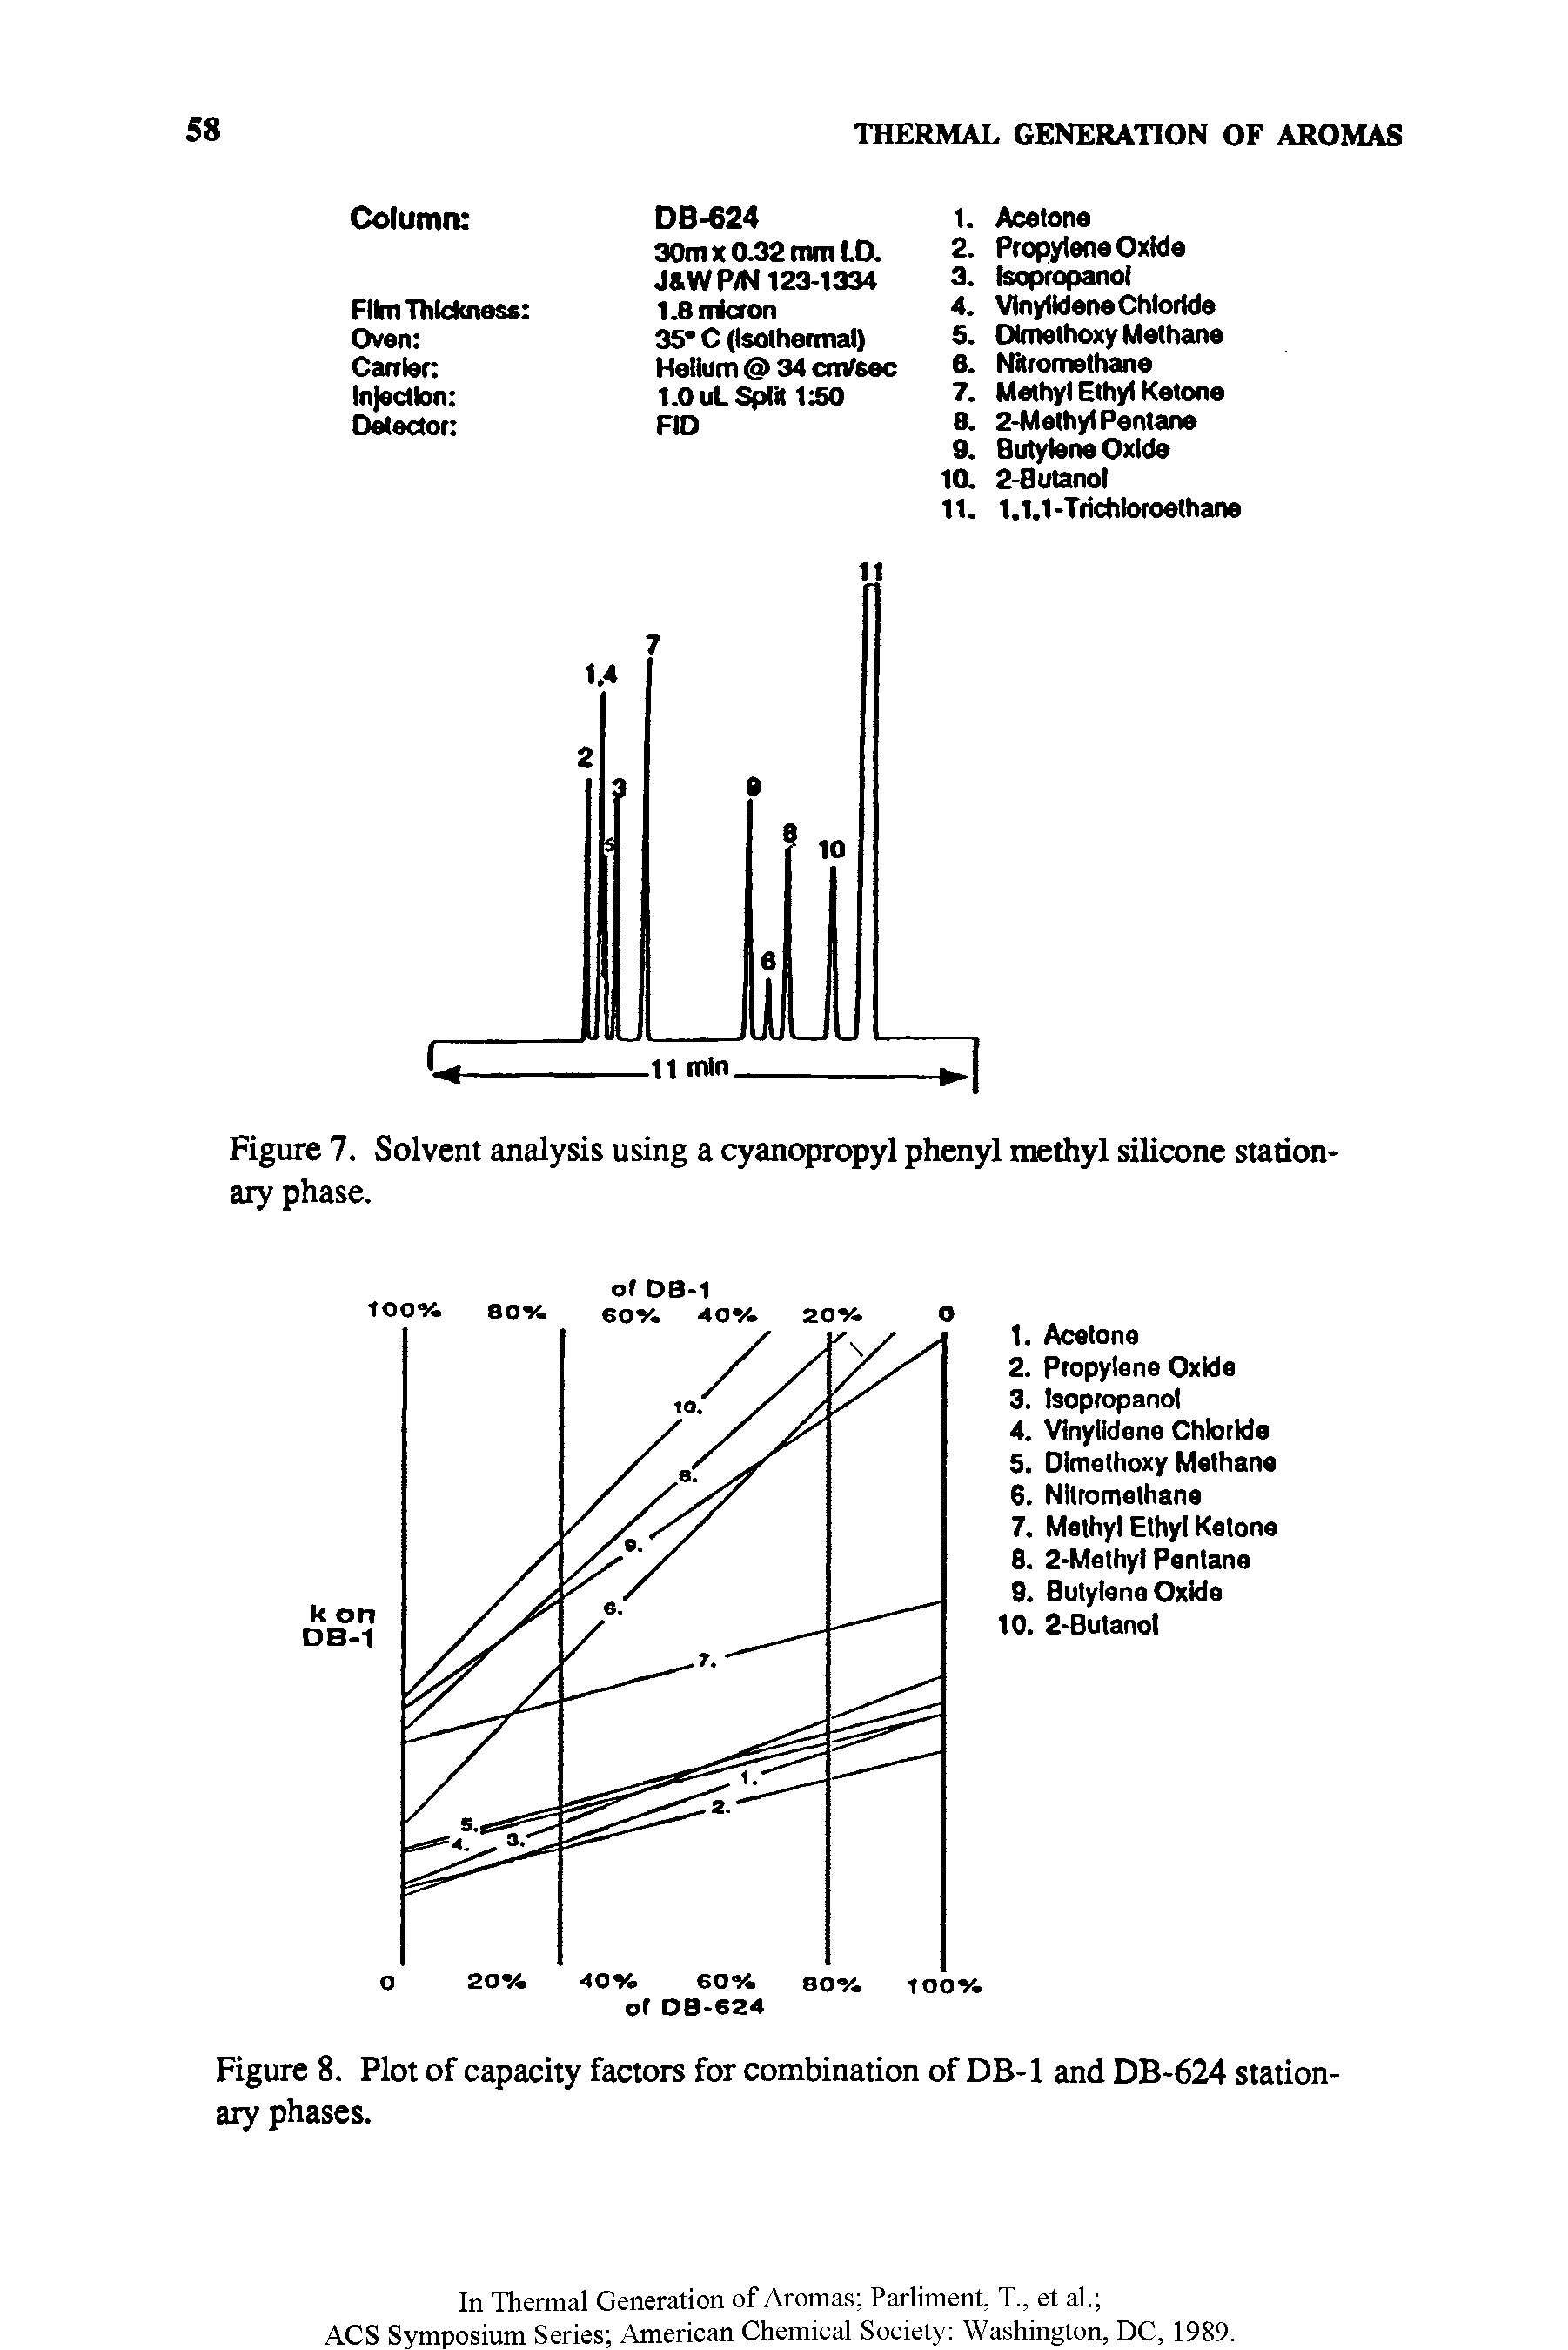 Figure 7. Solvent analysis using a cyanopropyl phenyl methyl silicone stationary phase.